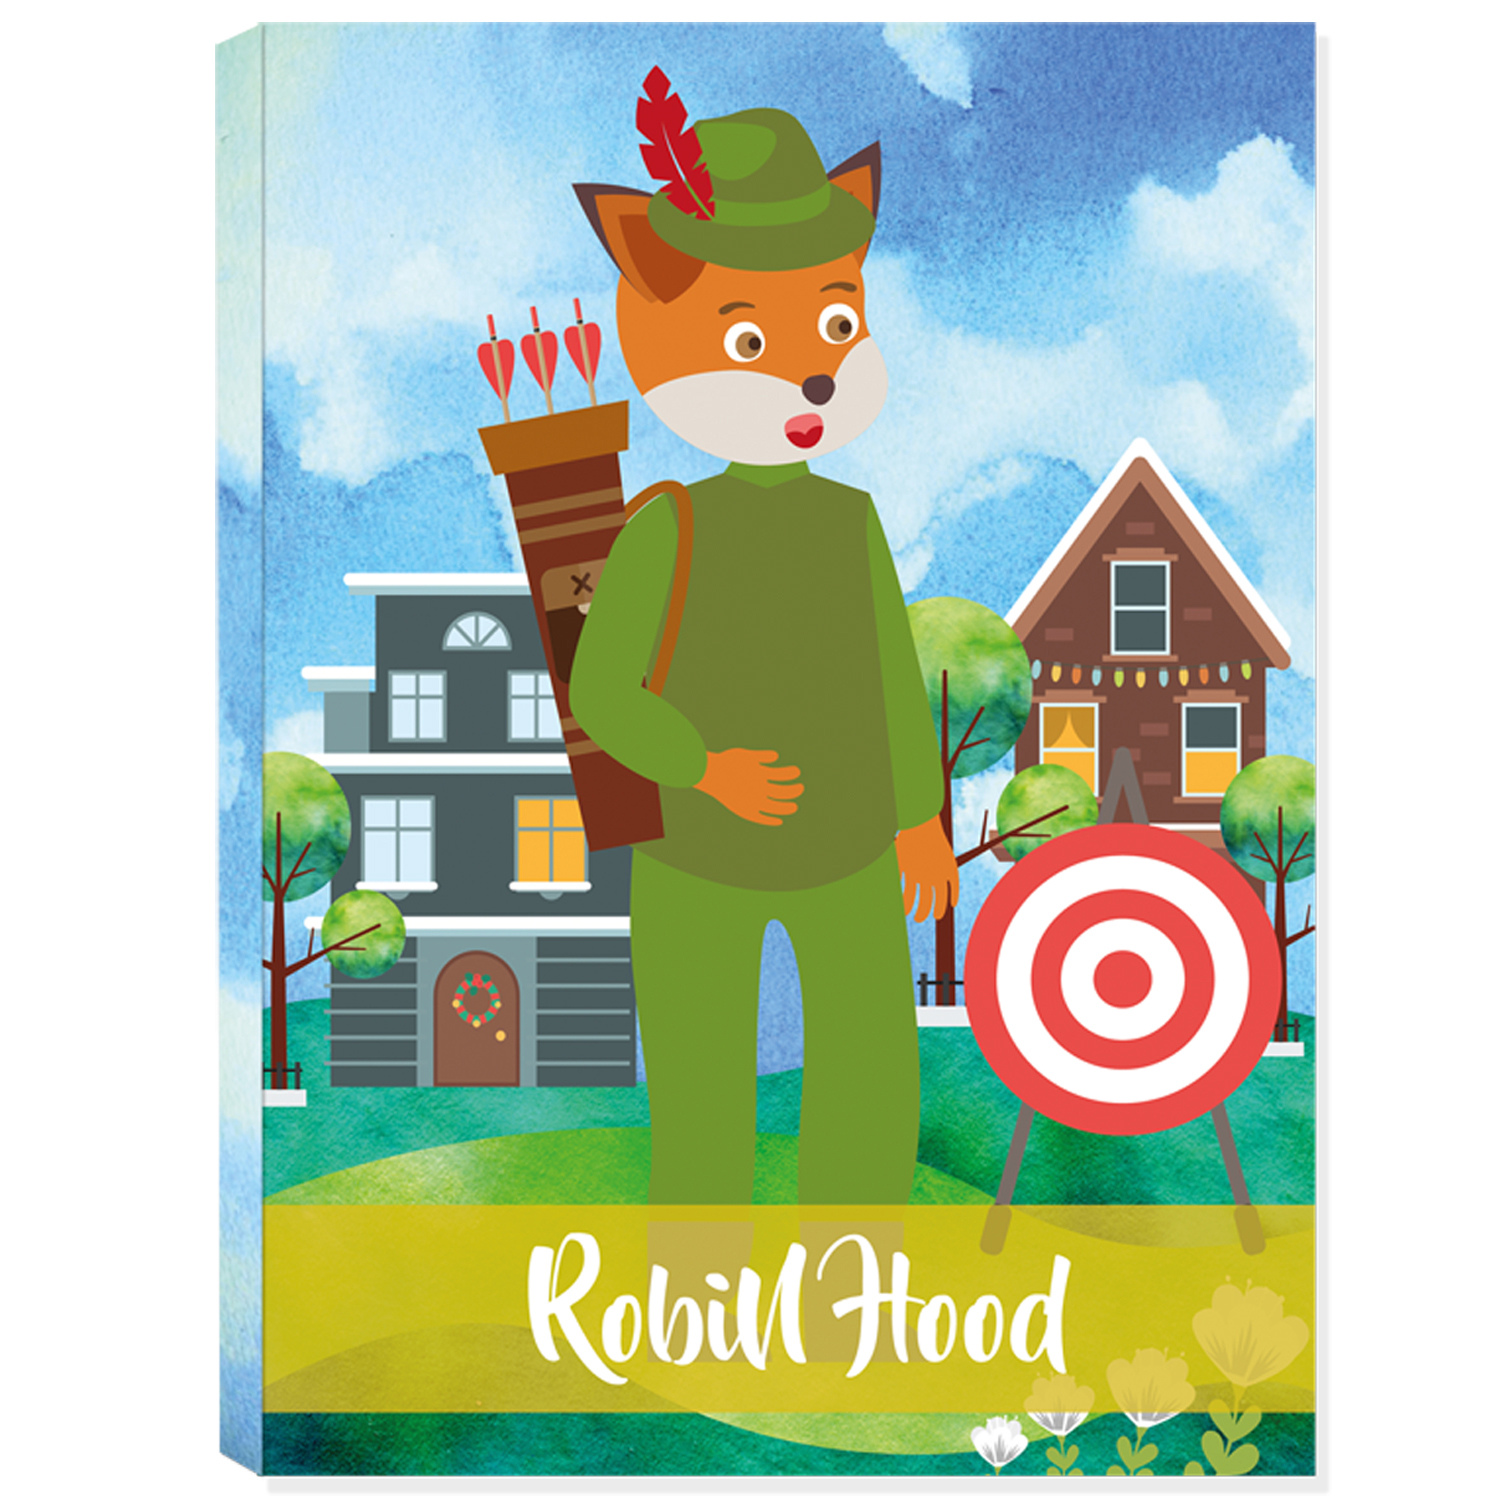 Libro: "Robin Hood"